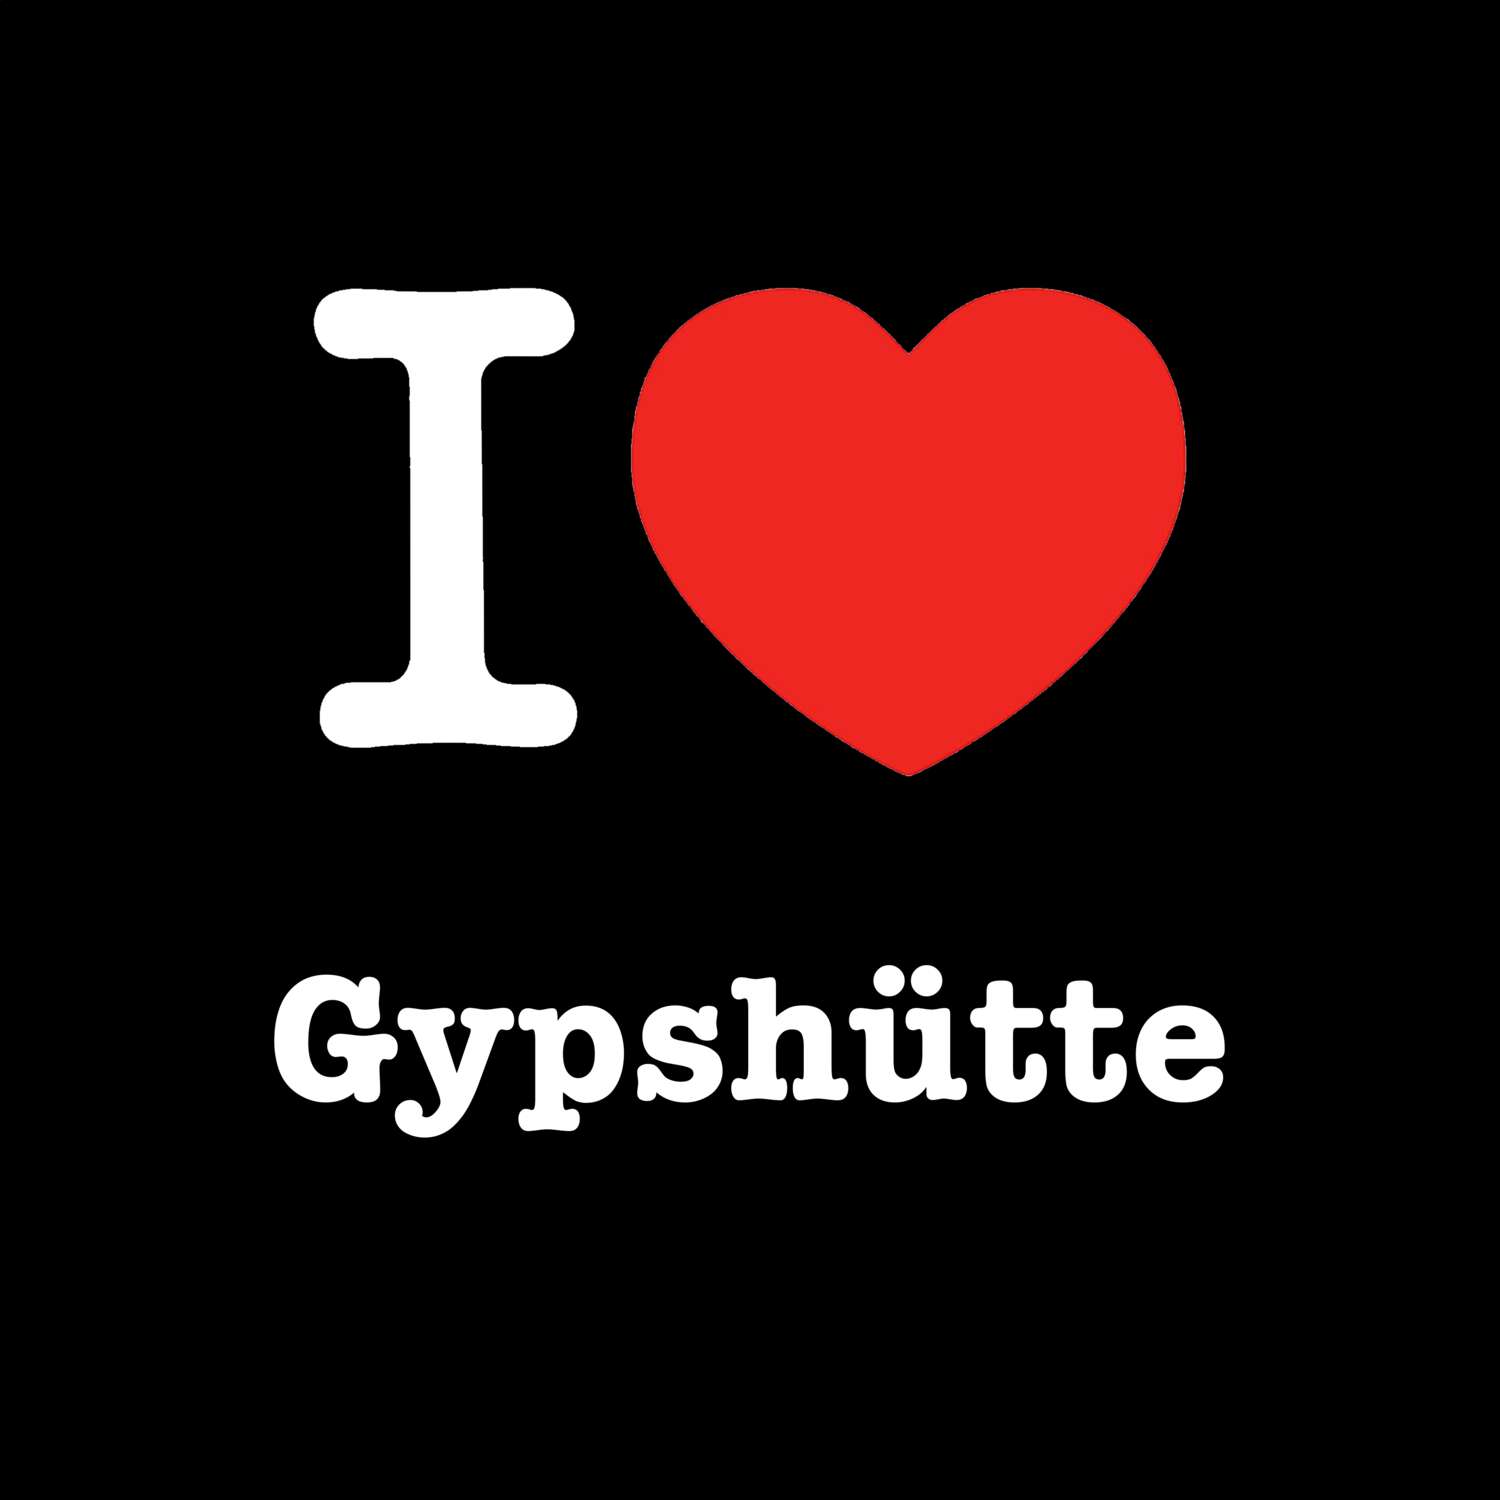 Gypshütte T-Shirt »I love«